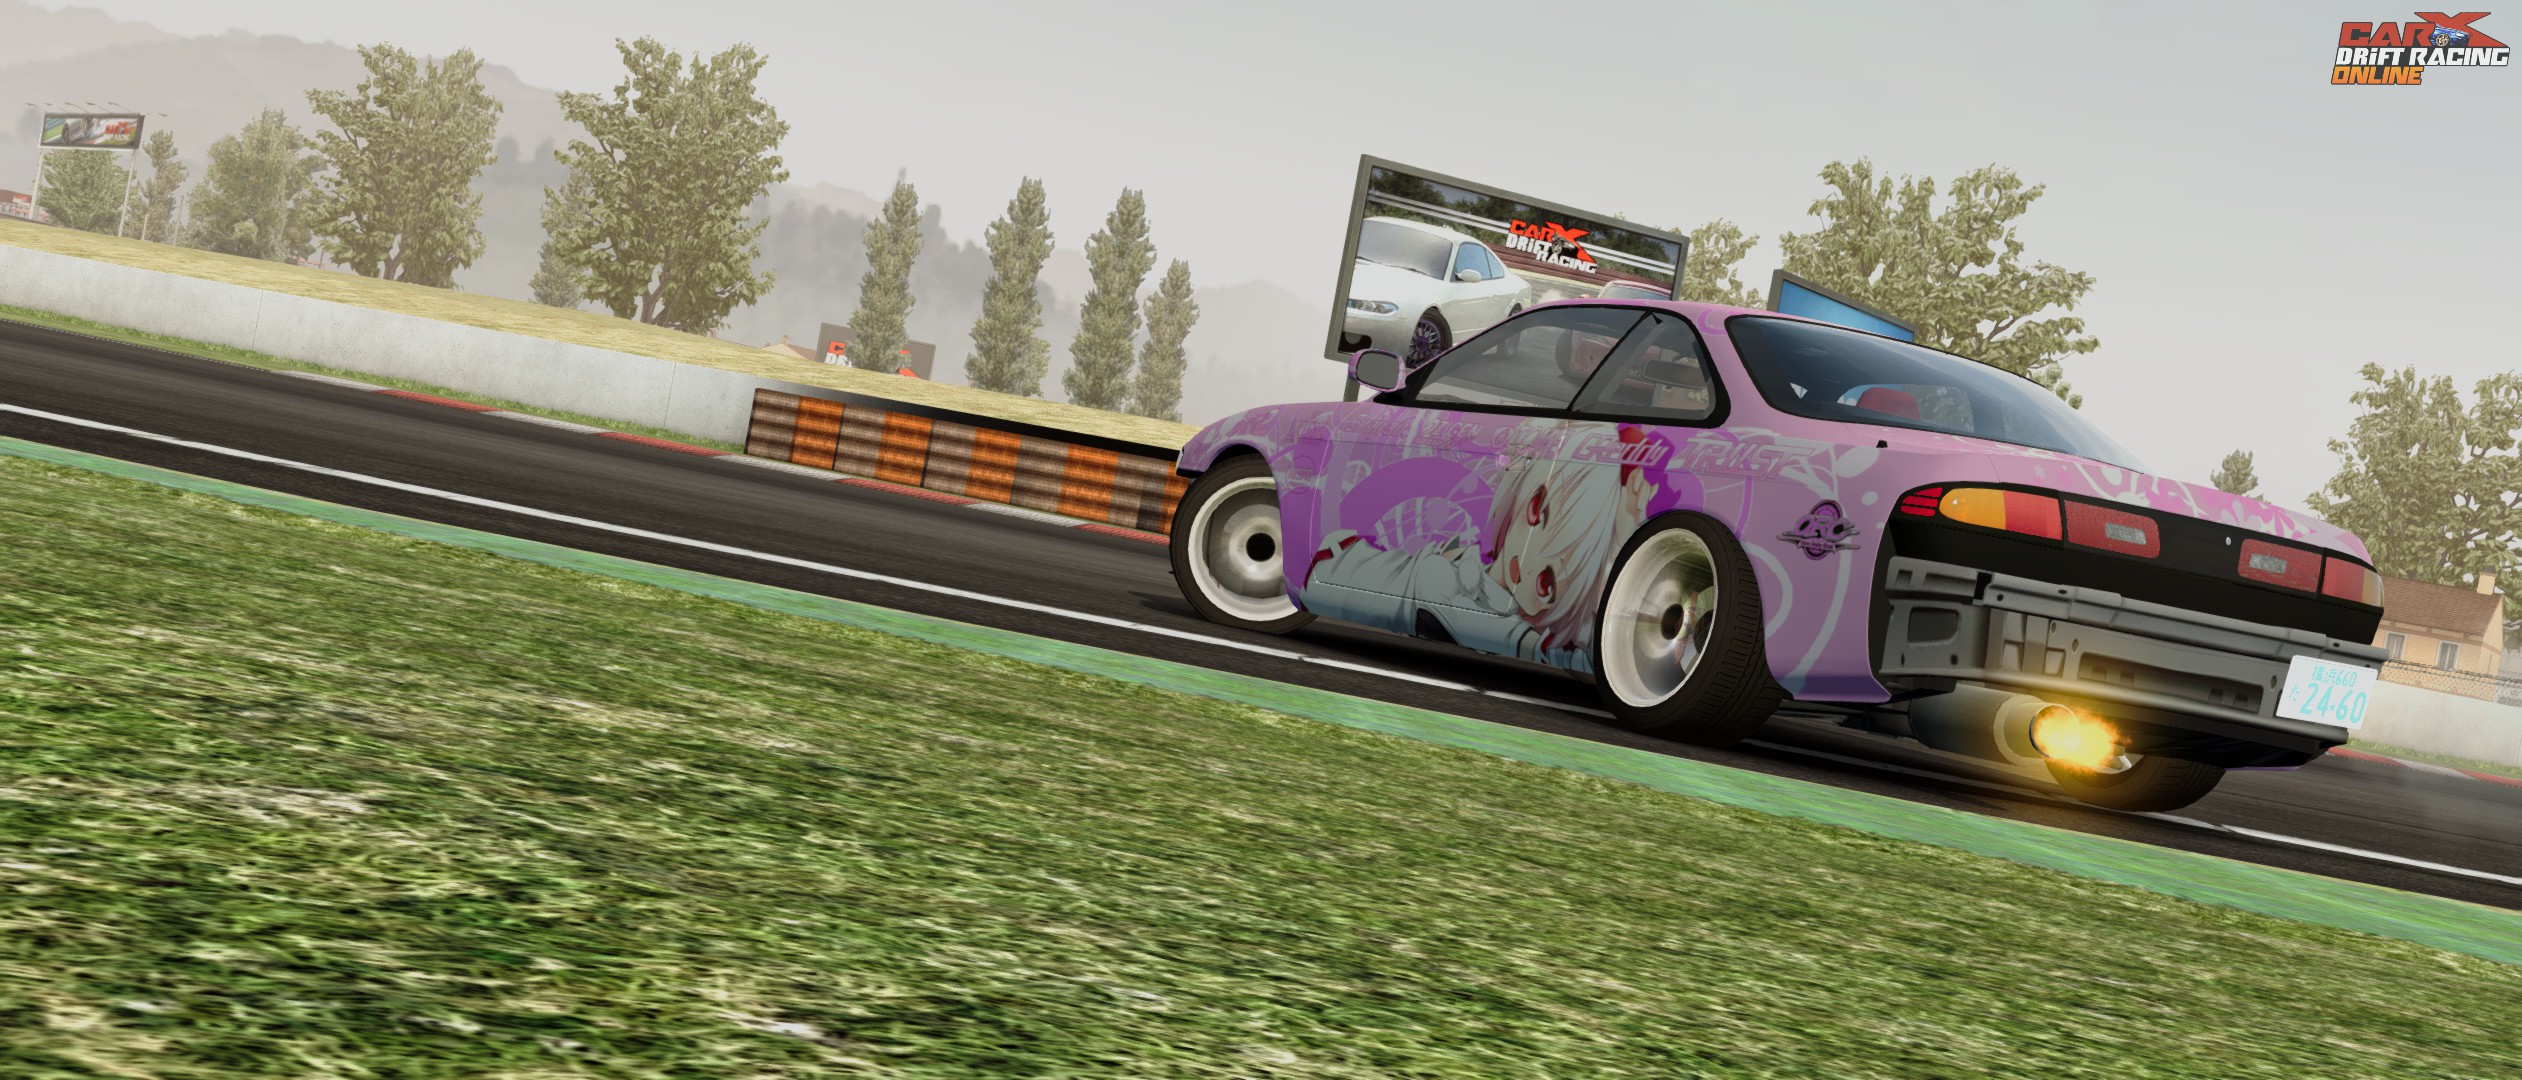 Steam Community :: Guide :: CarX Drift Racing Online Modding Tutorial